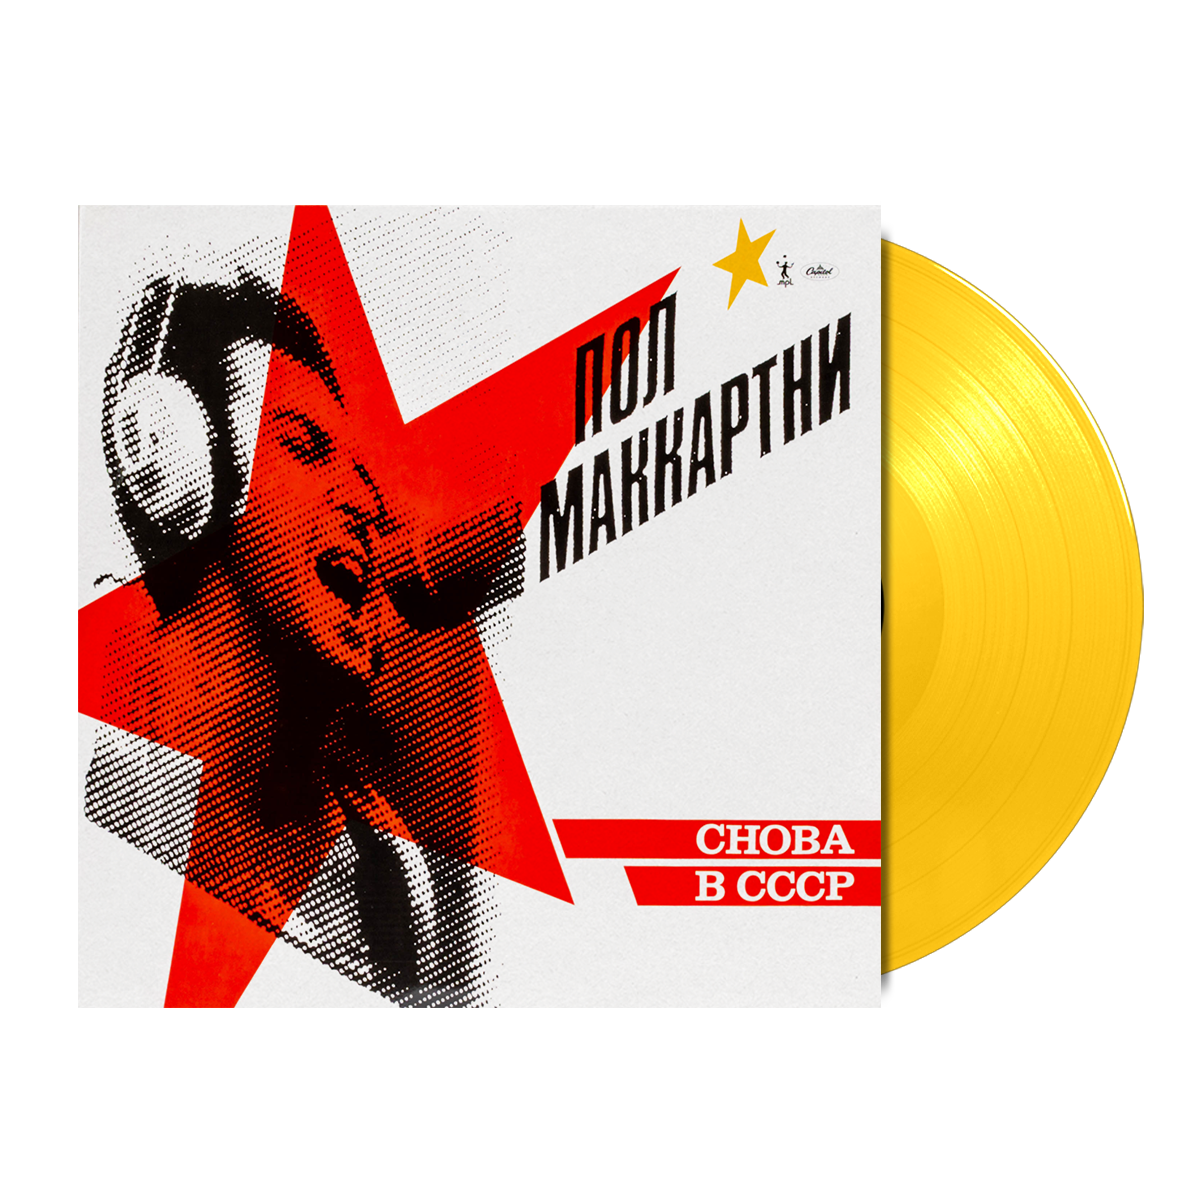 Paul McCartney - CHOBA B CCCP Edition LP – uDiscover